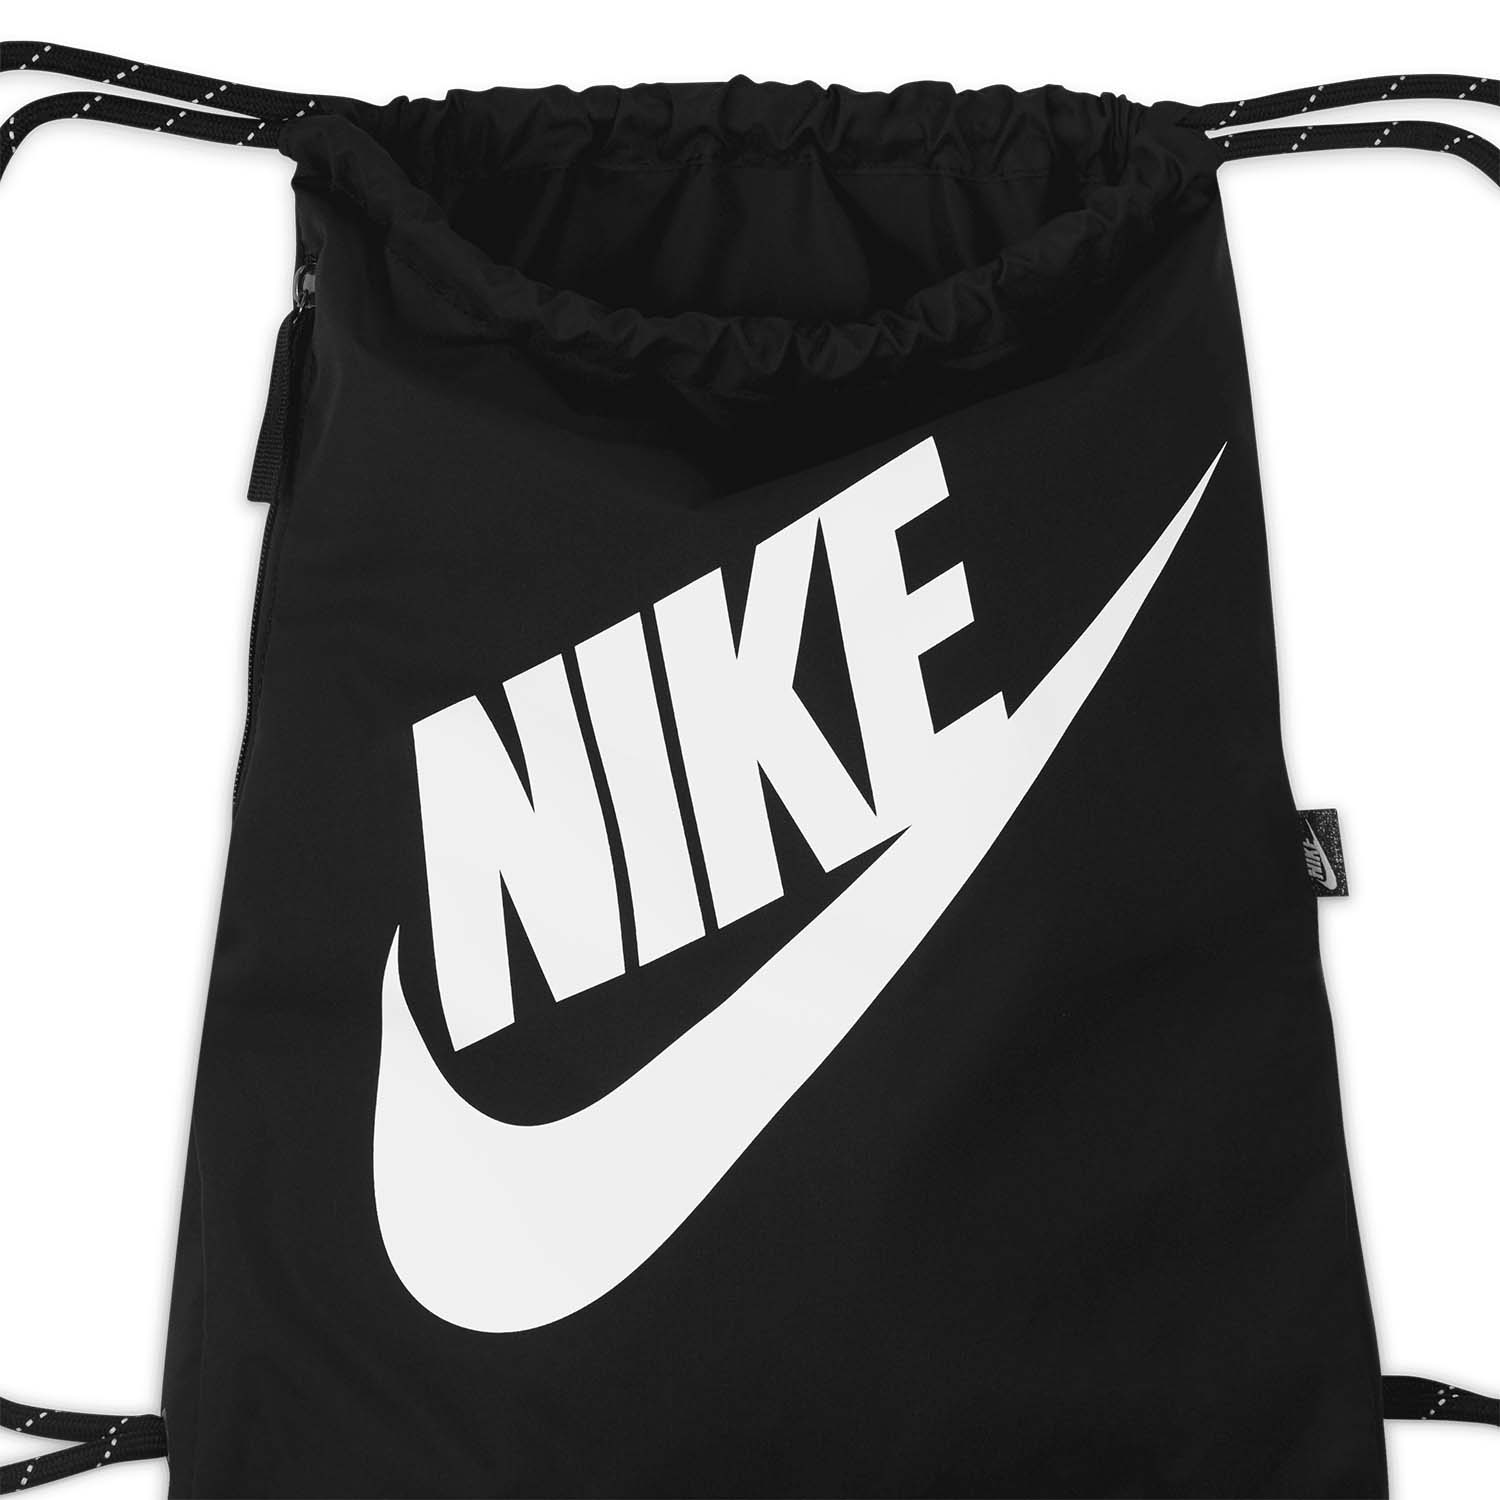 Nike Heritage Sackpack - Black/White